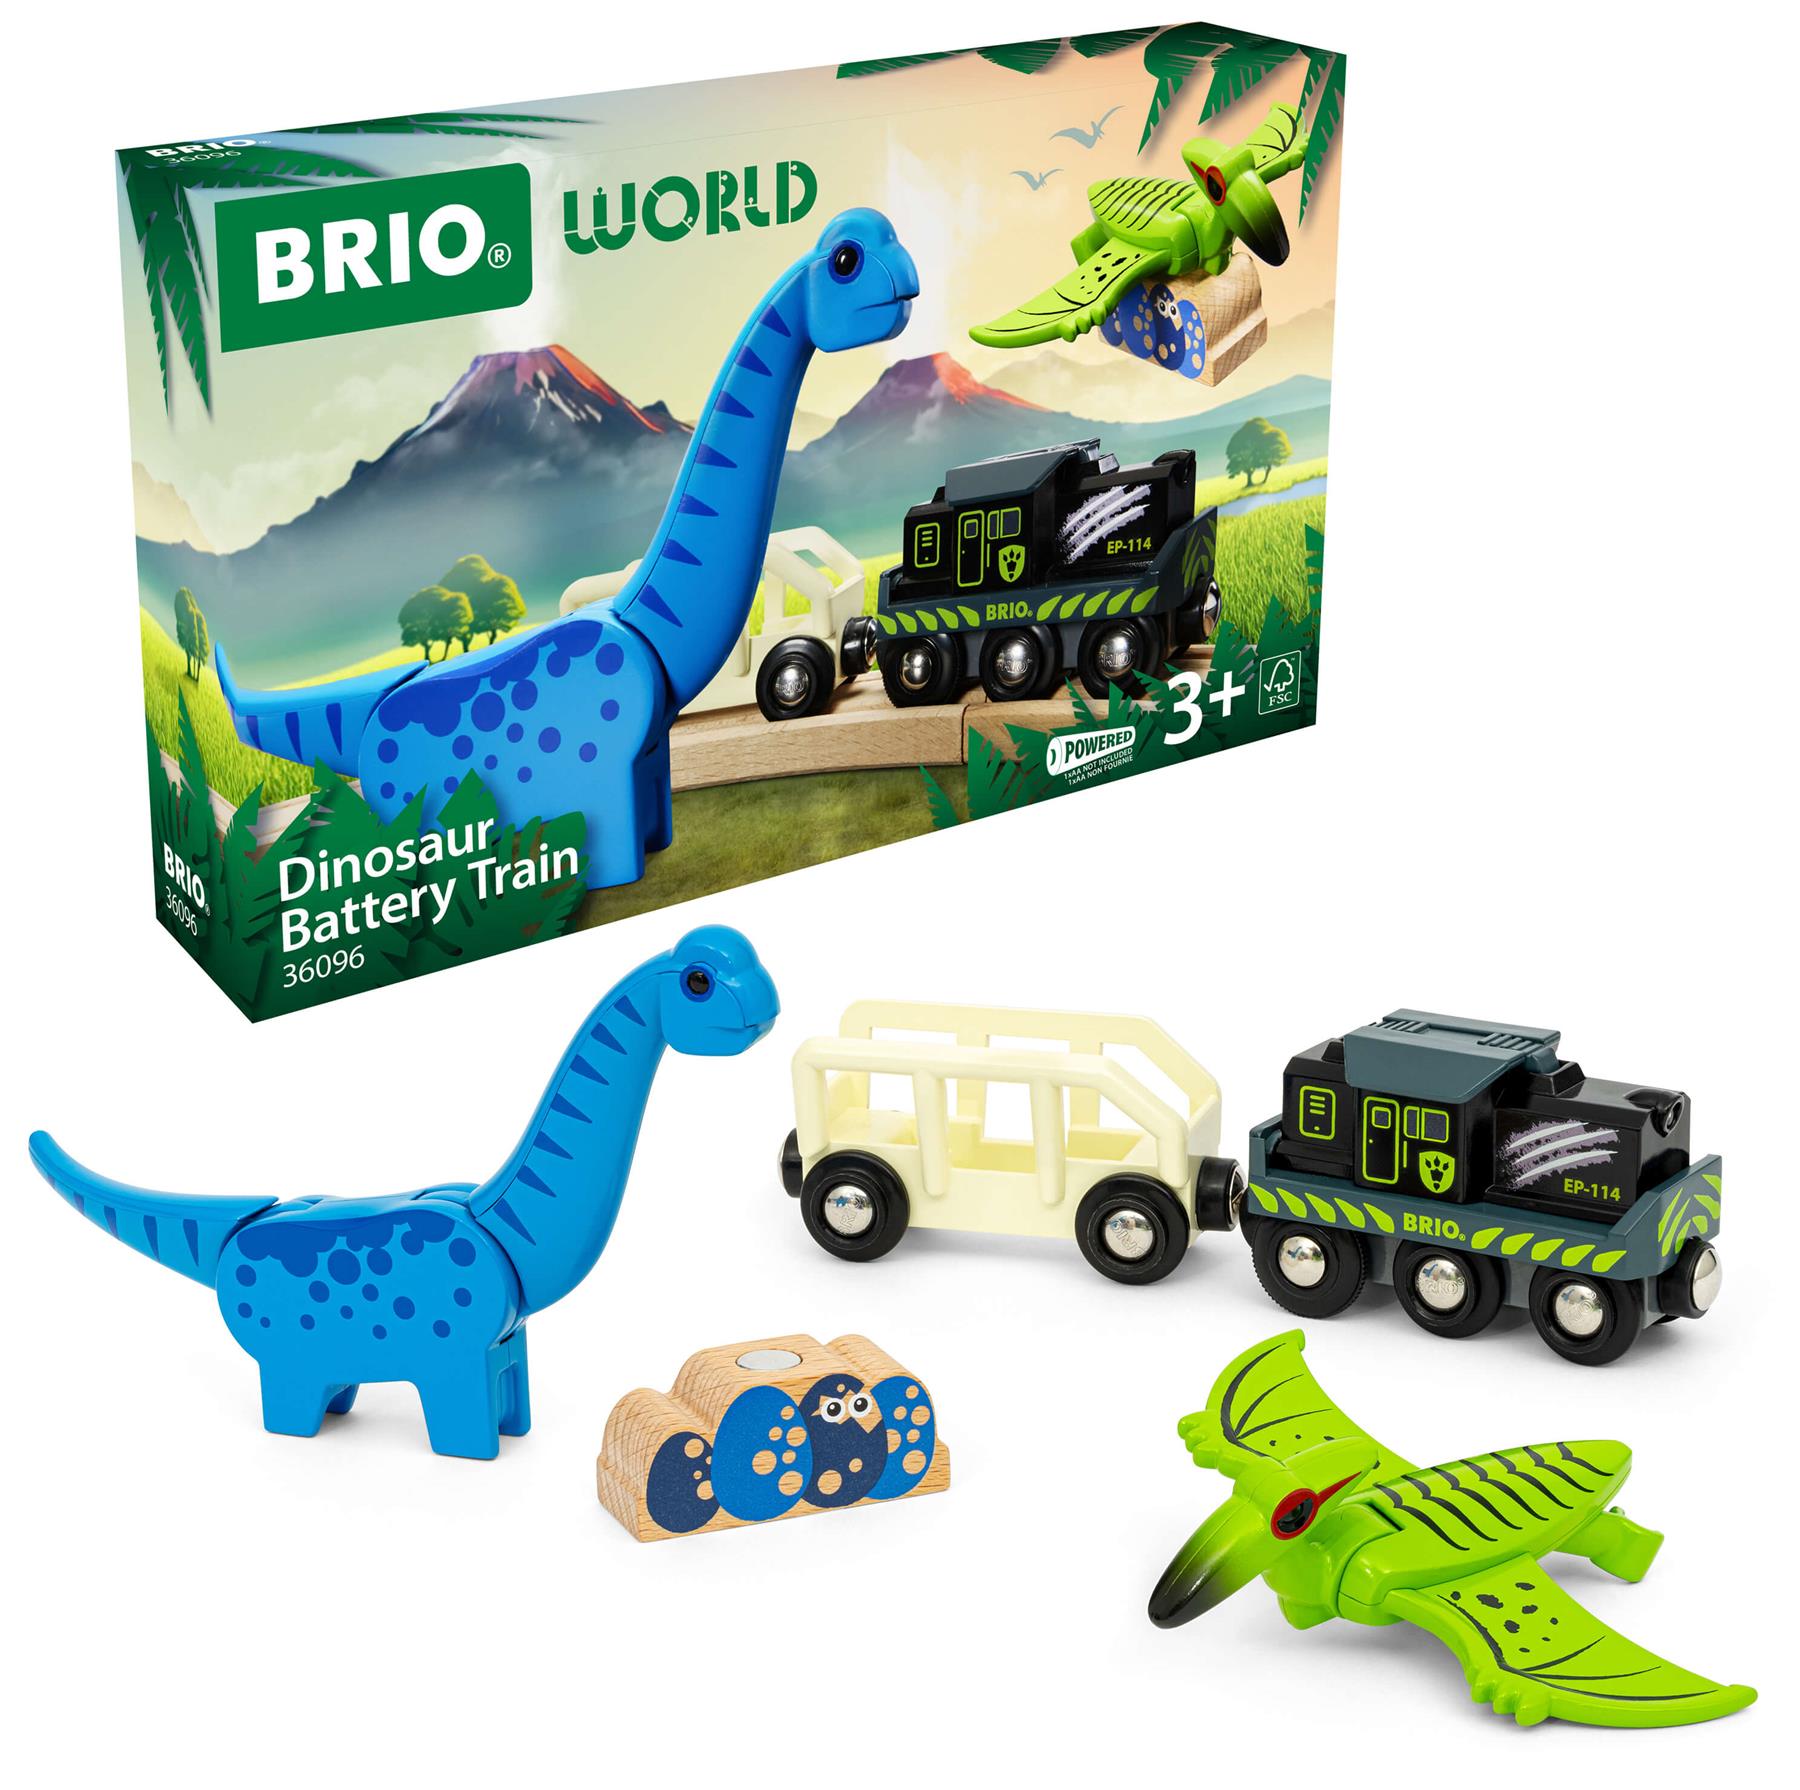 Brio World 36096 Dinosaur Battery Train